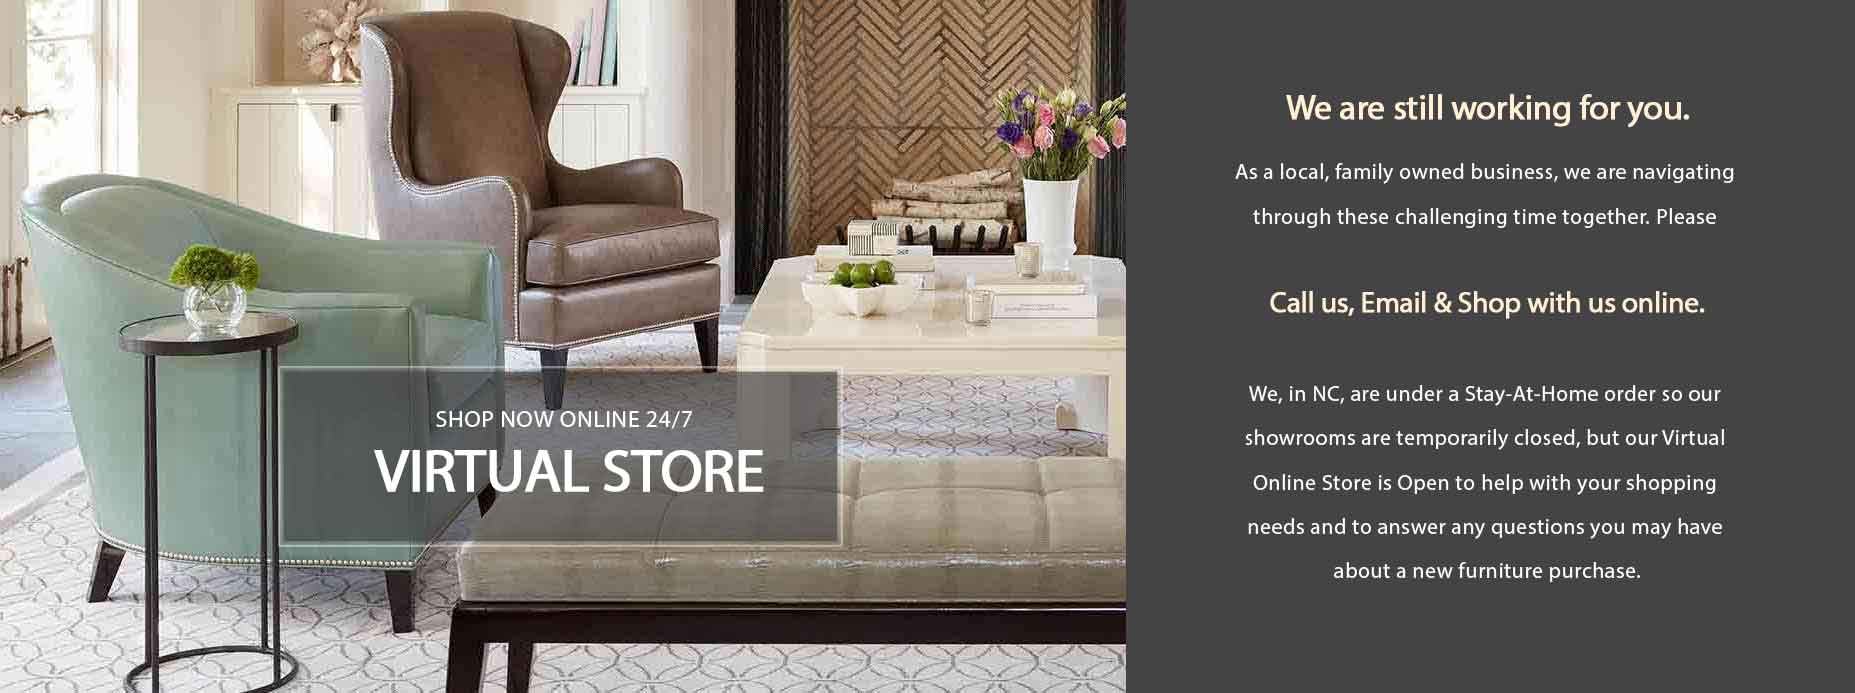 North Carolina Discount Furniture Stores Offer Brand Name